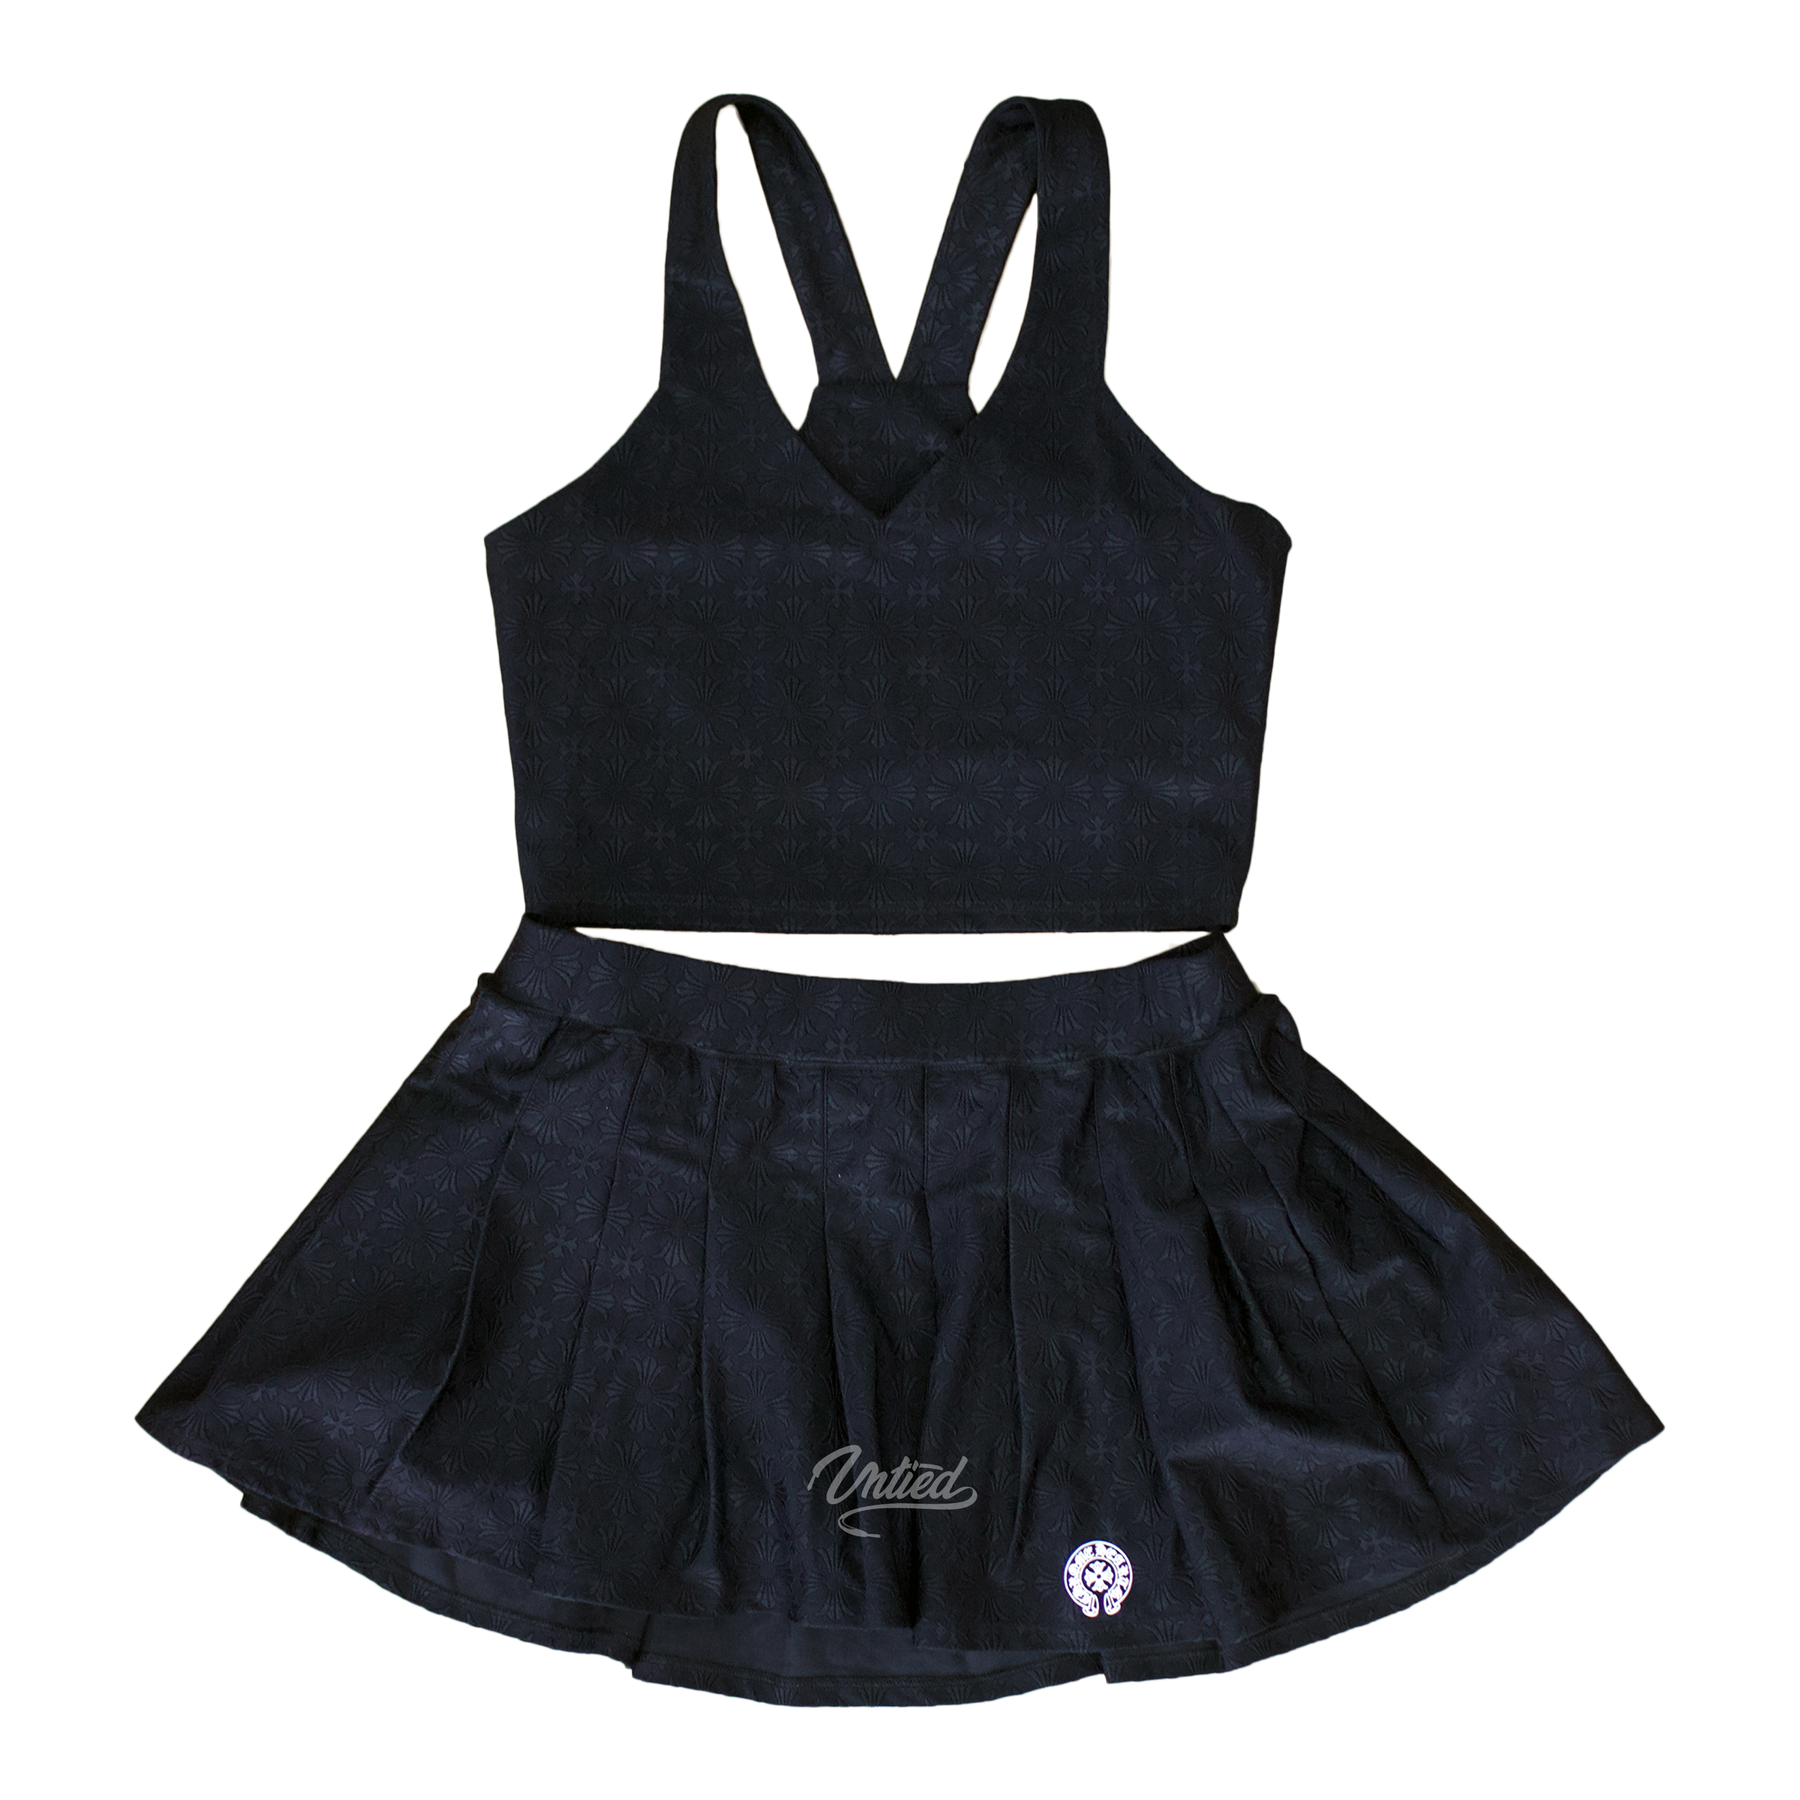 Chrome Hearts Motif Tennis Set (Bra/Skirt) "Black"